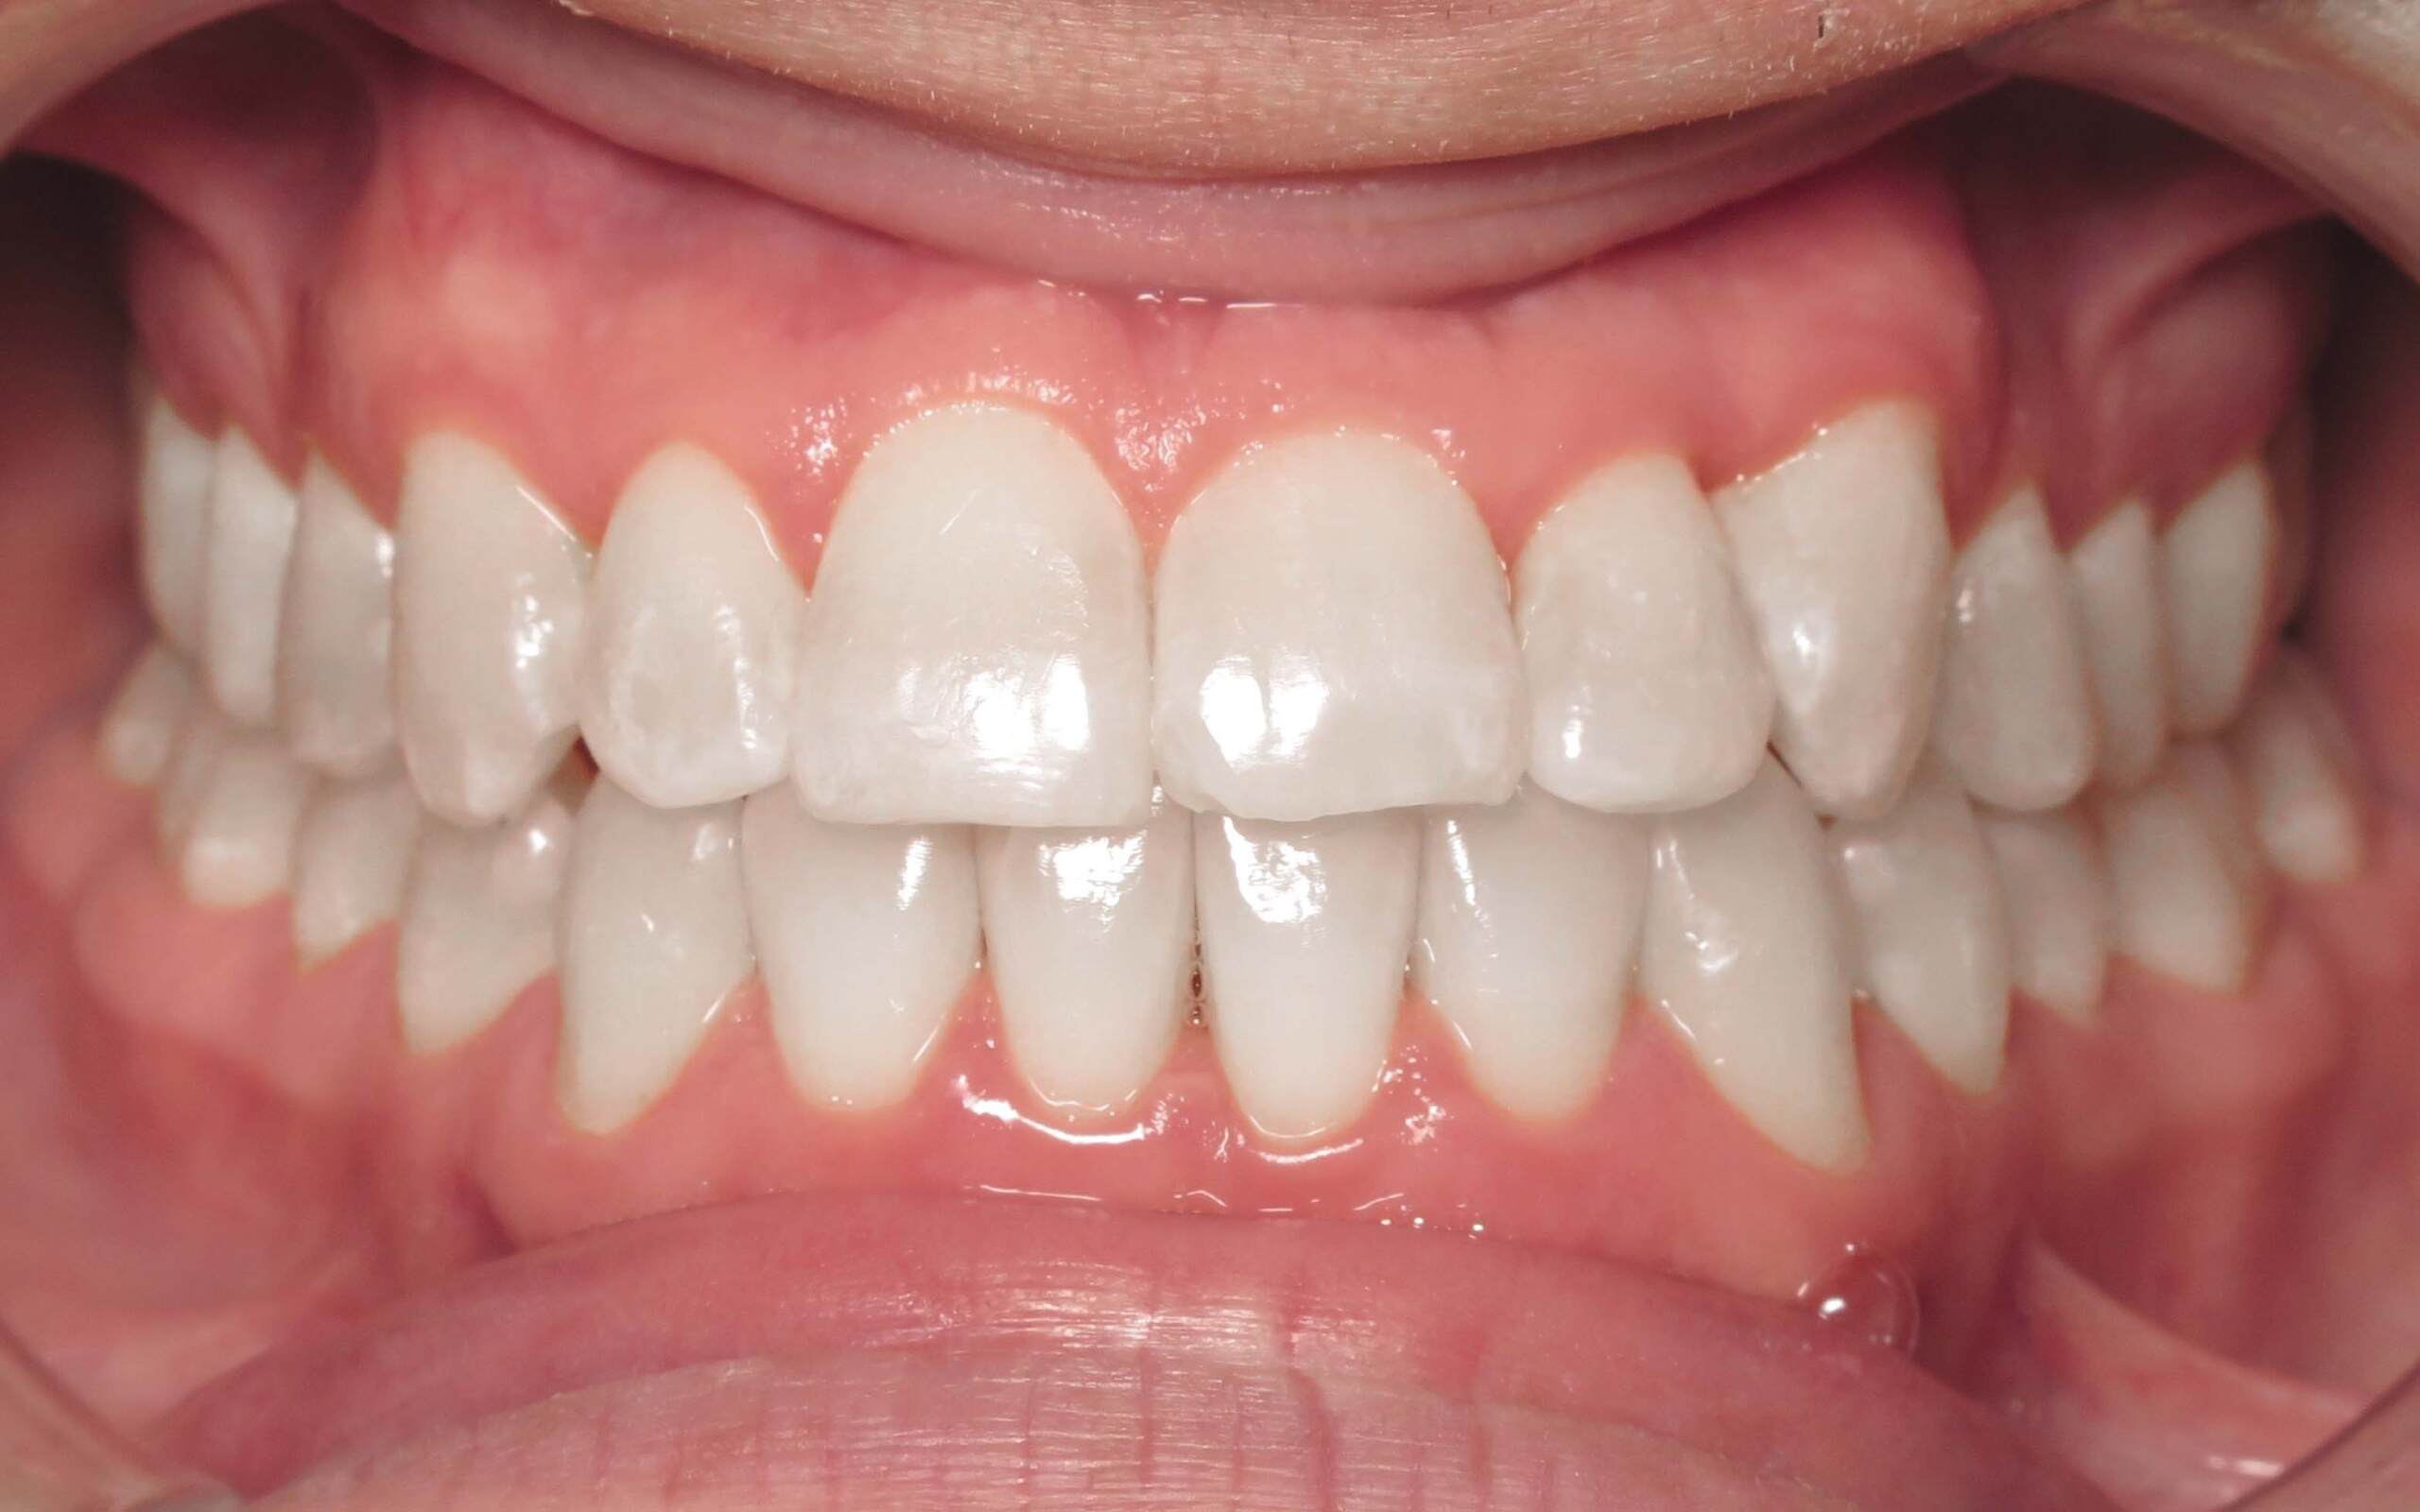 Parks Orthodontics Invisalign Patient 15 - After